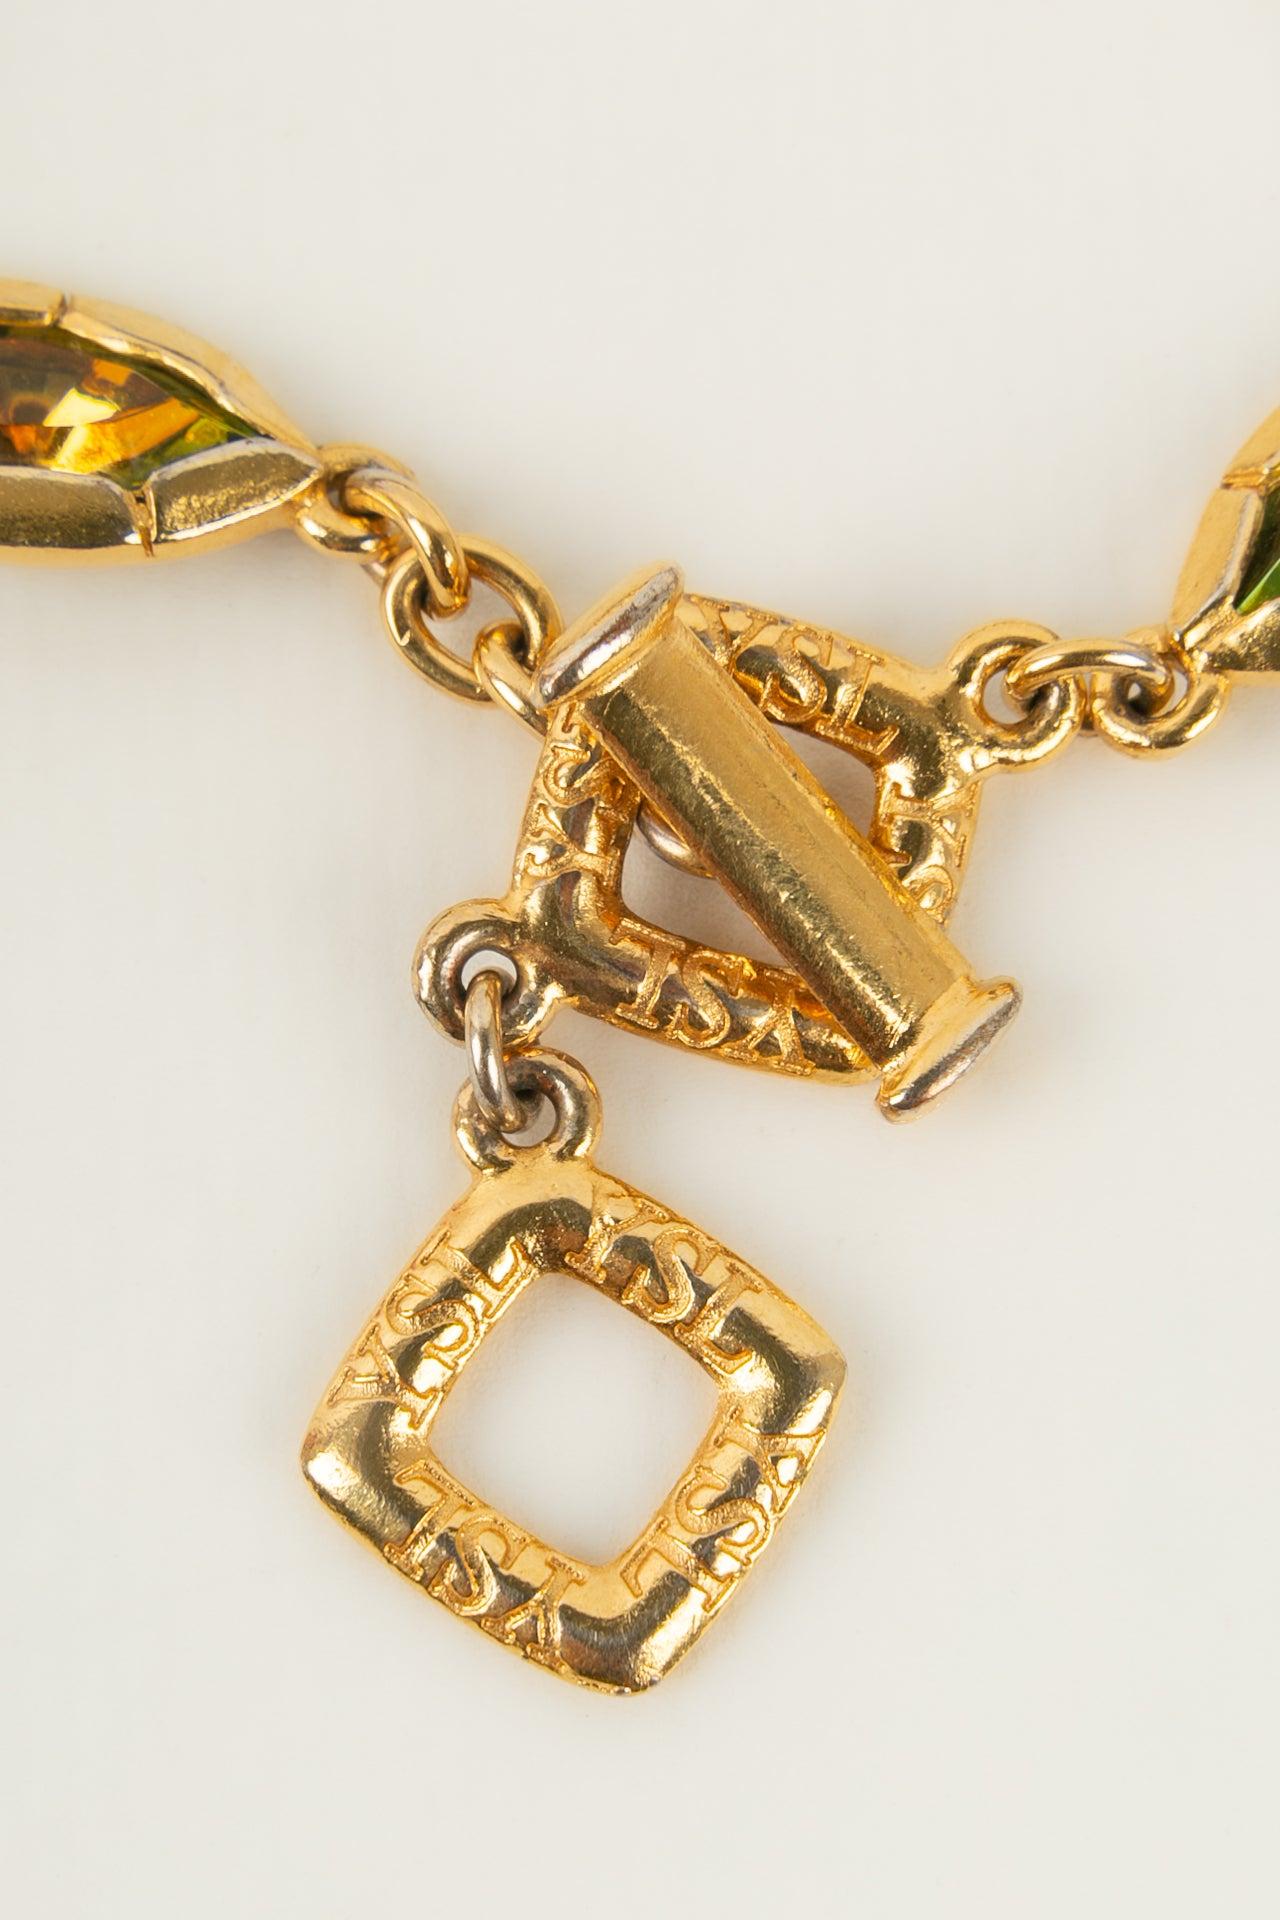 Yves Saint Laurent Bracelet in Gold-Plated Metal and Orange Rhinestones For Sale 1